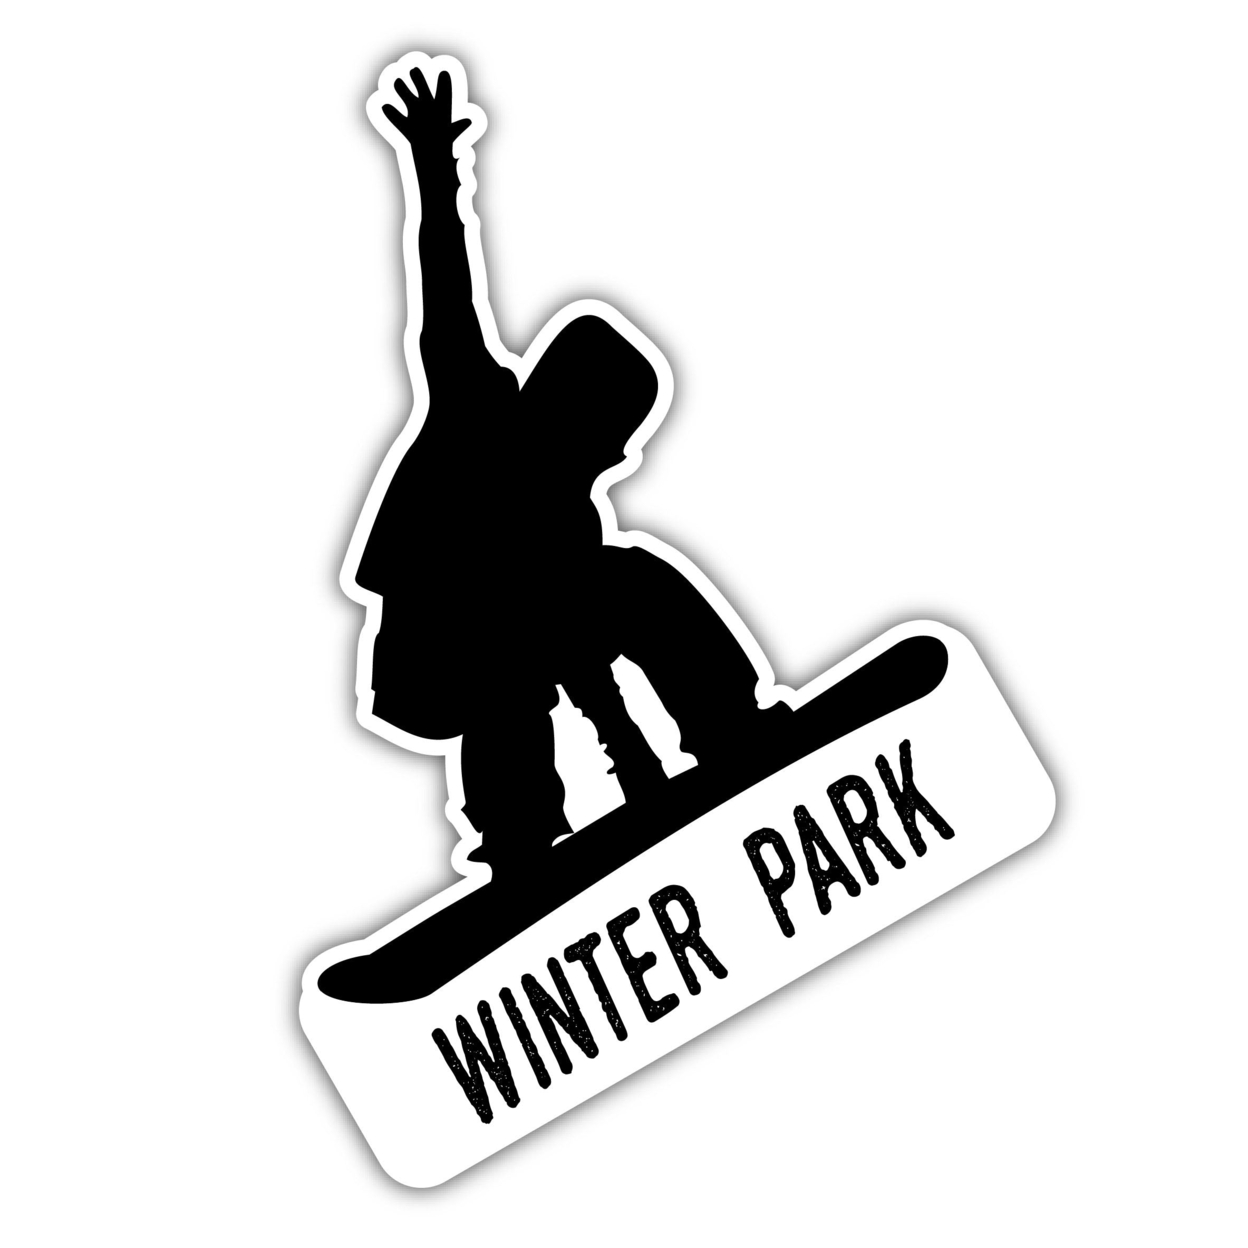 Winter Park Colorado Ski Adventures Souvenir Approximately 5 X 2.5-Inch Vinyl Decal Sticker Goggle Design